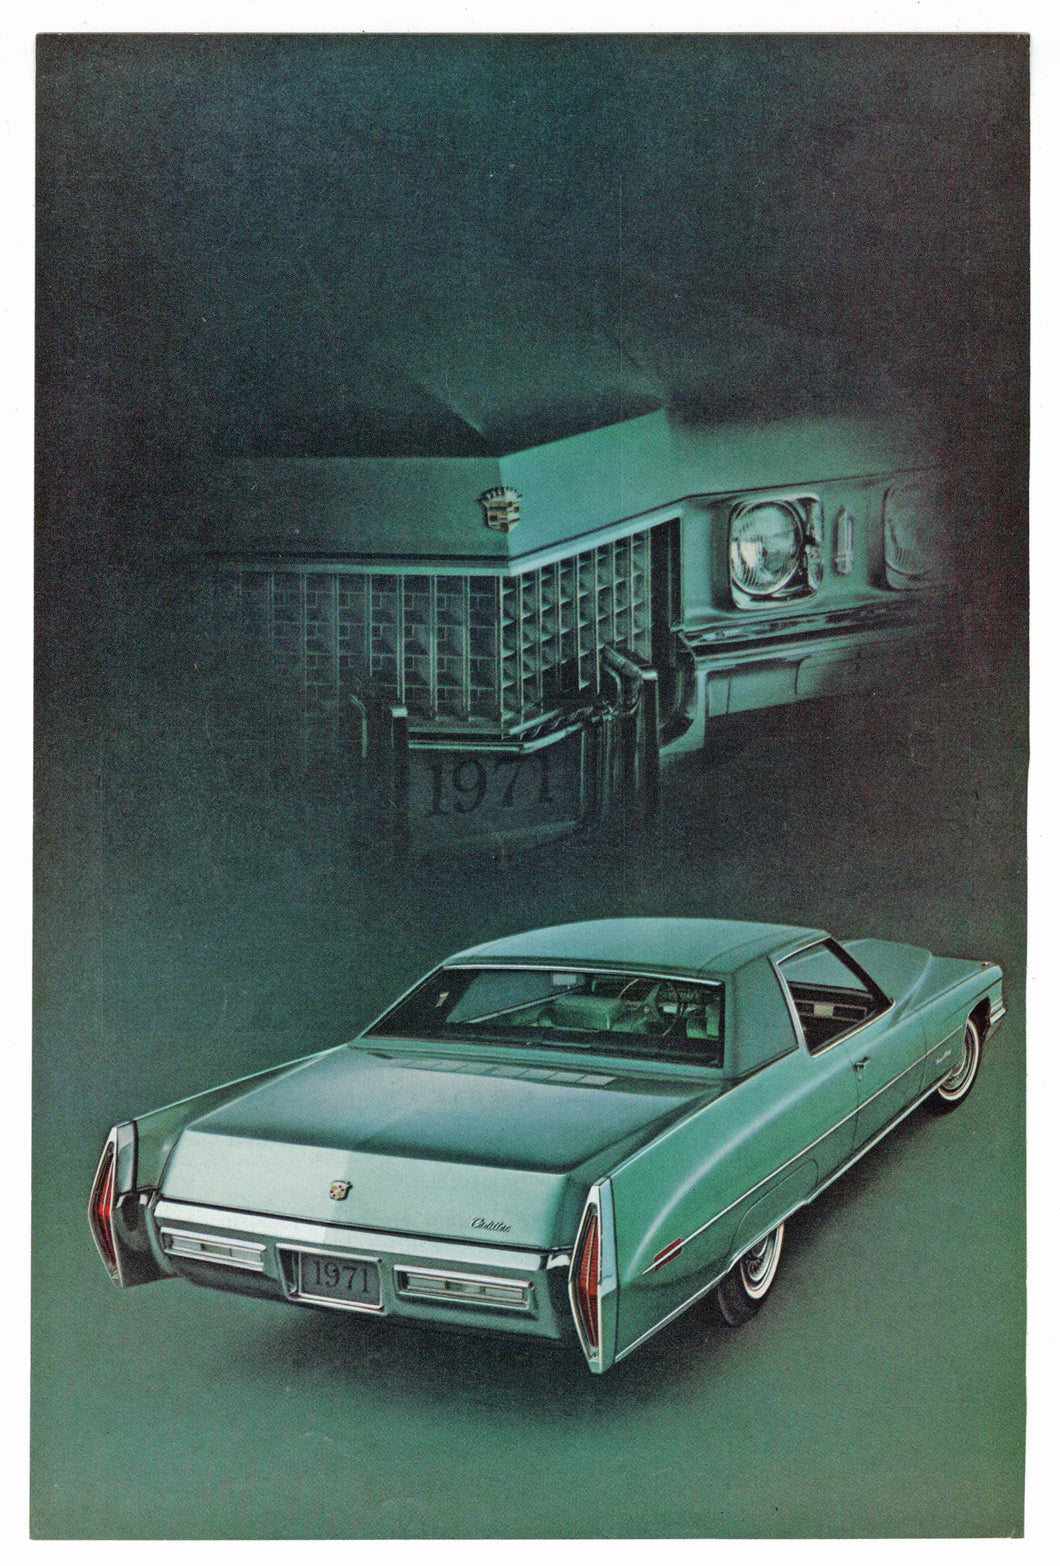 Cadillac for 1971 - Vintage Ad # 256 - General Motors Company 1971